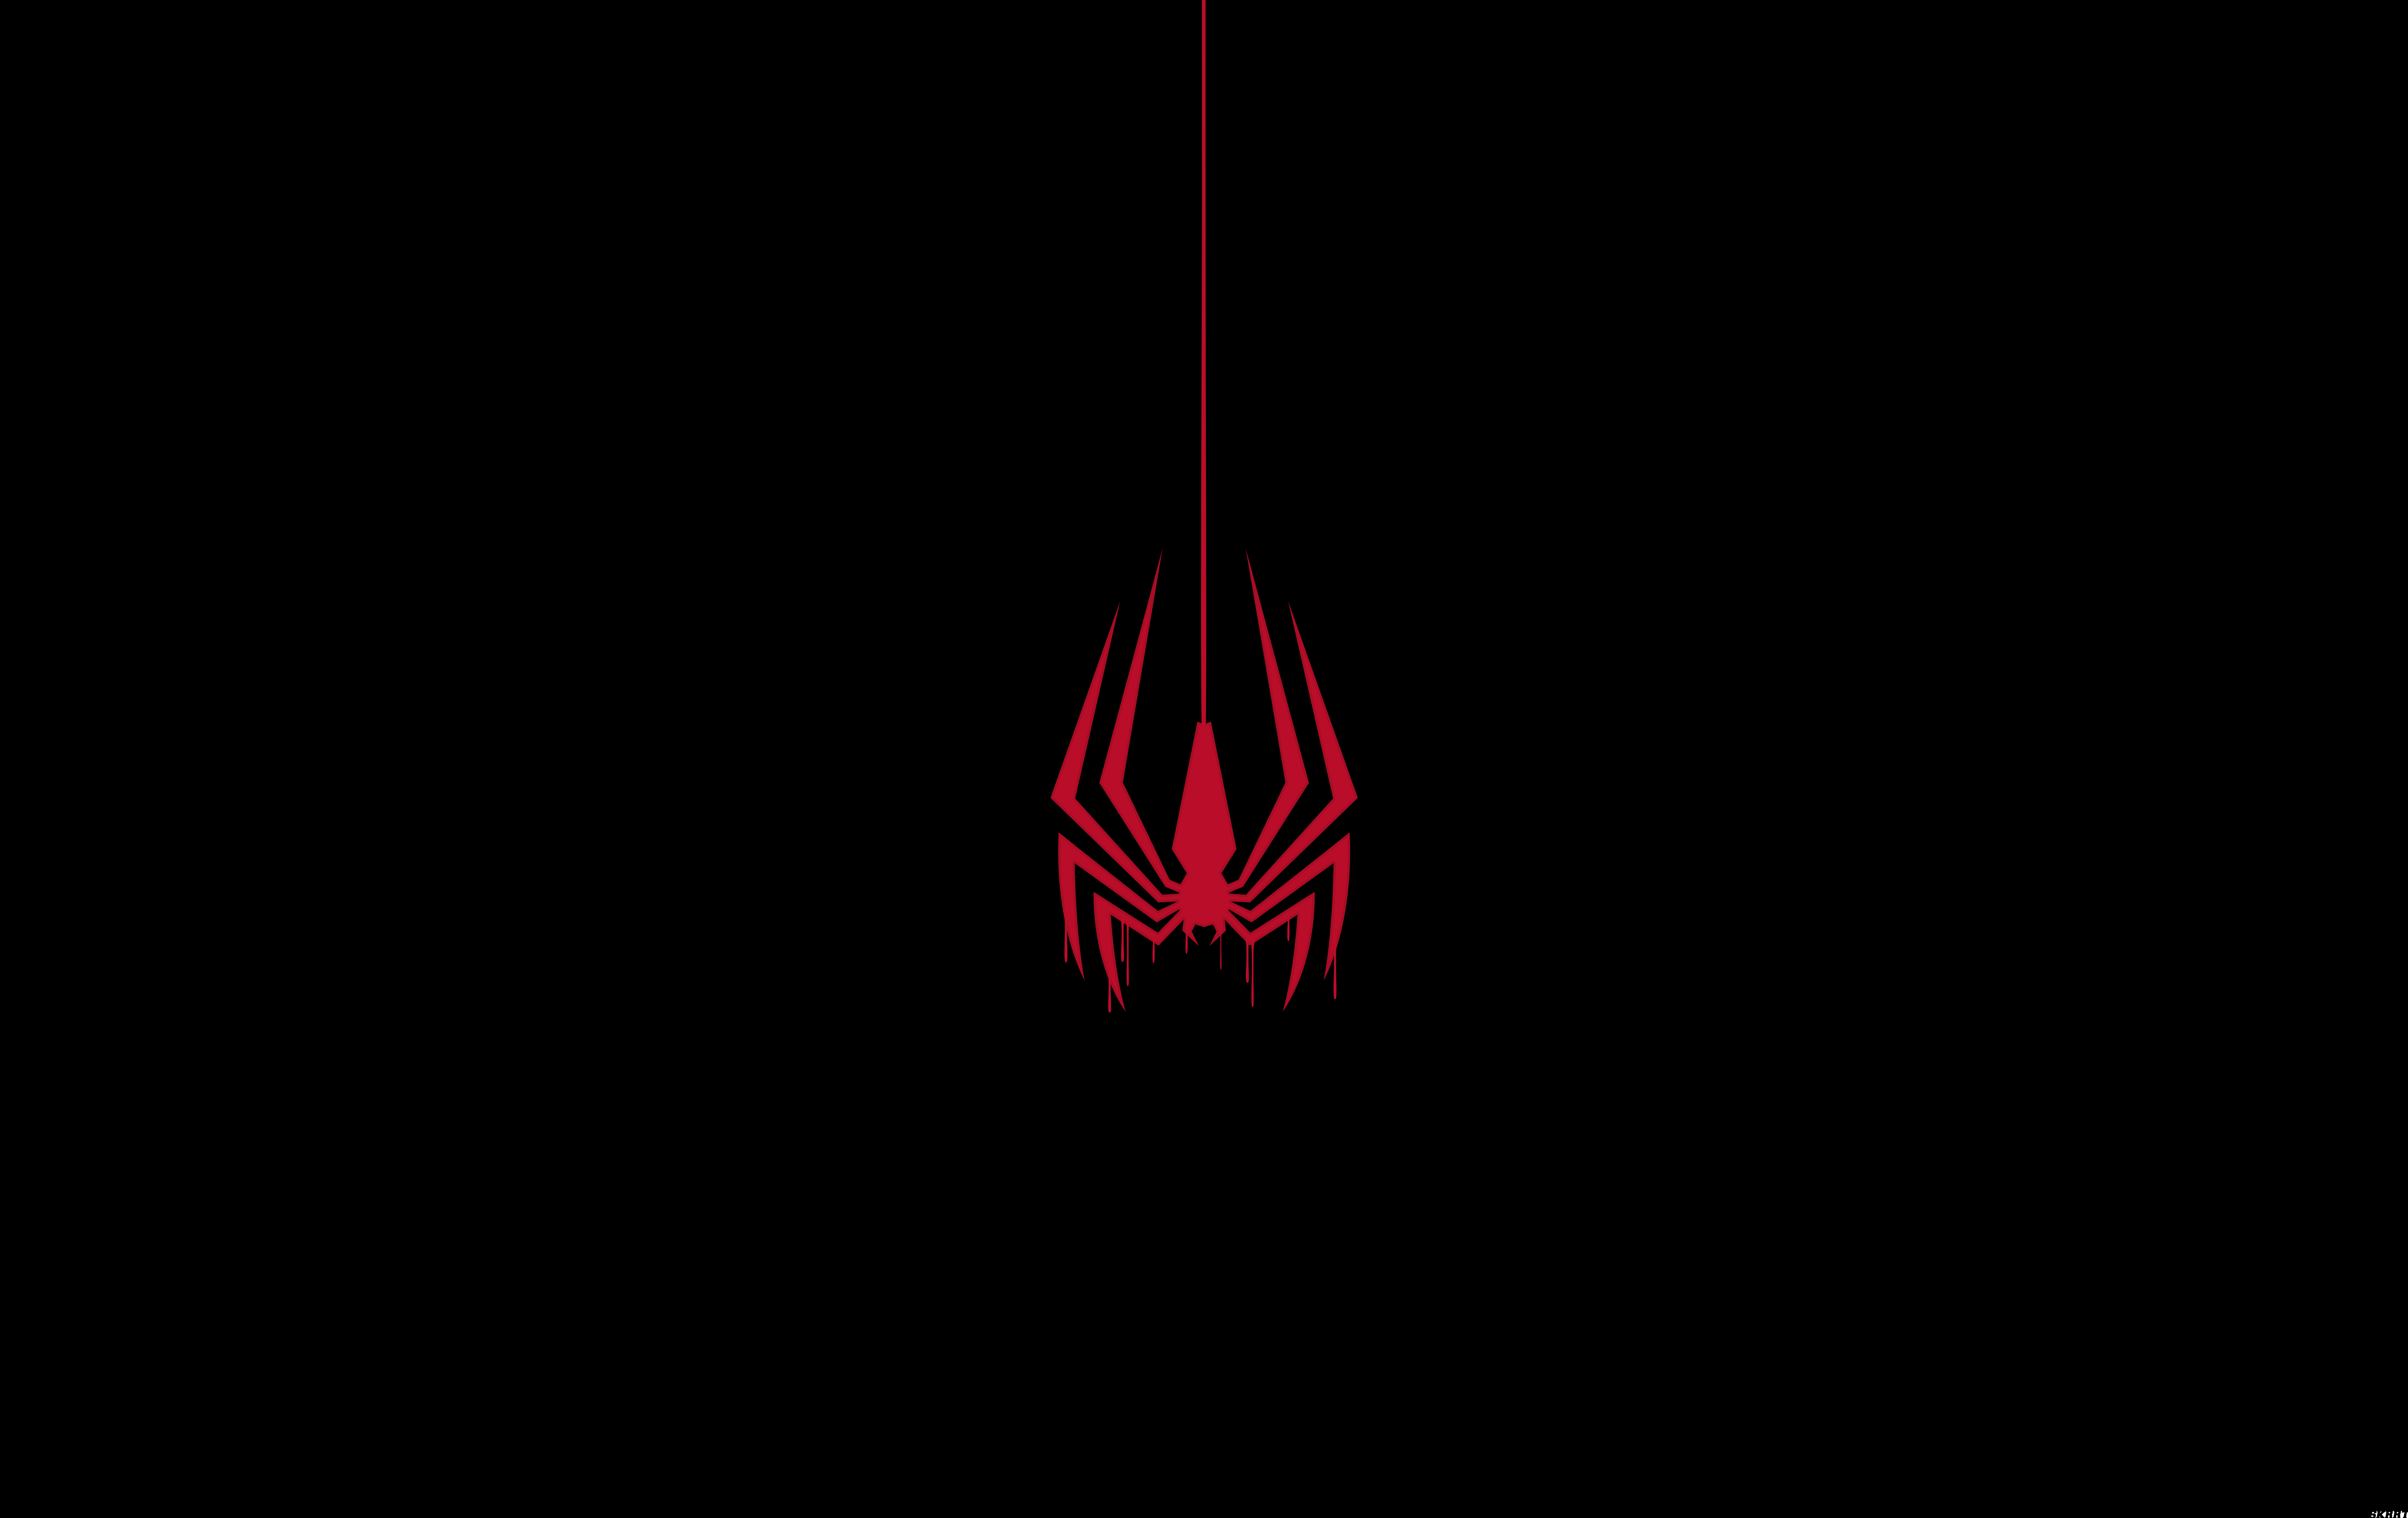 Spider Man Spiderman 2 Simple Background Black Red Dripping Paint Spider Logo Superhero Marvel Comic 8179x5156